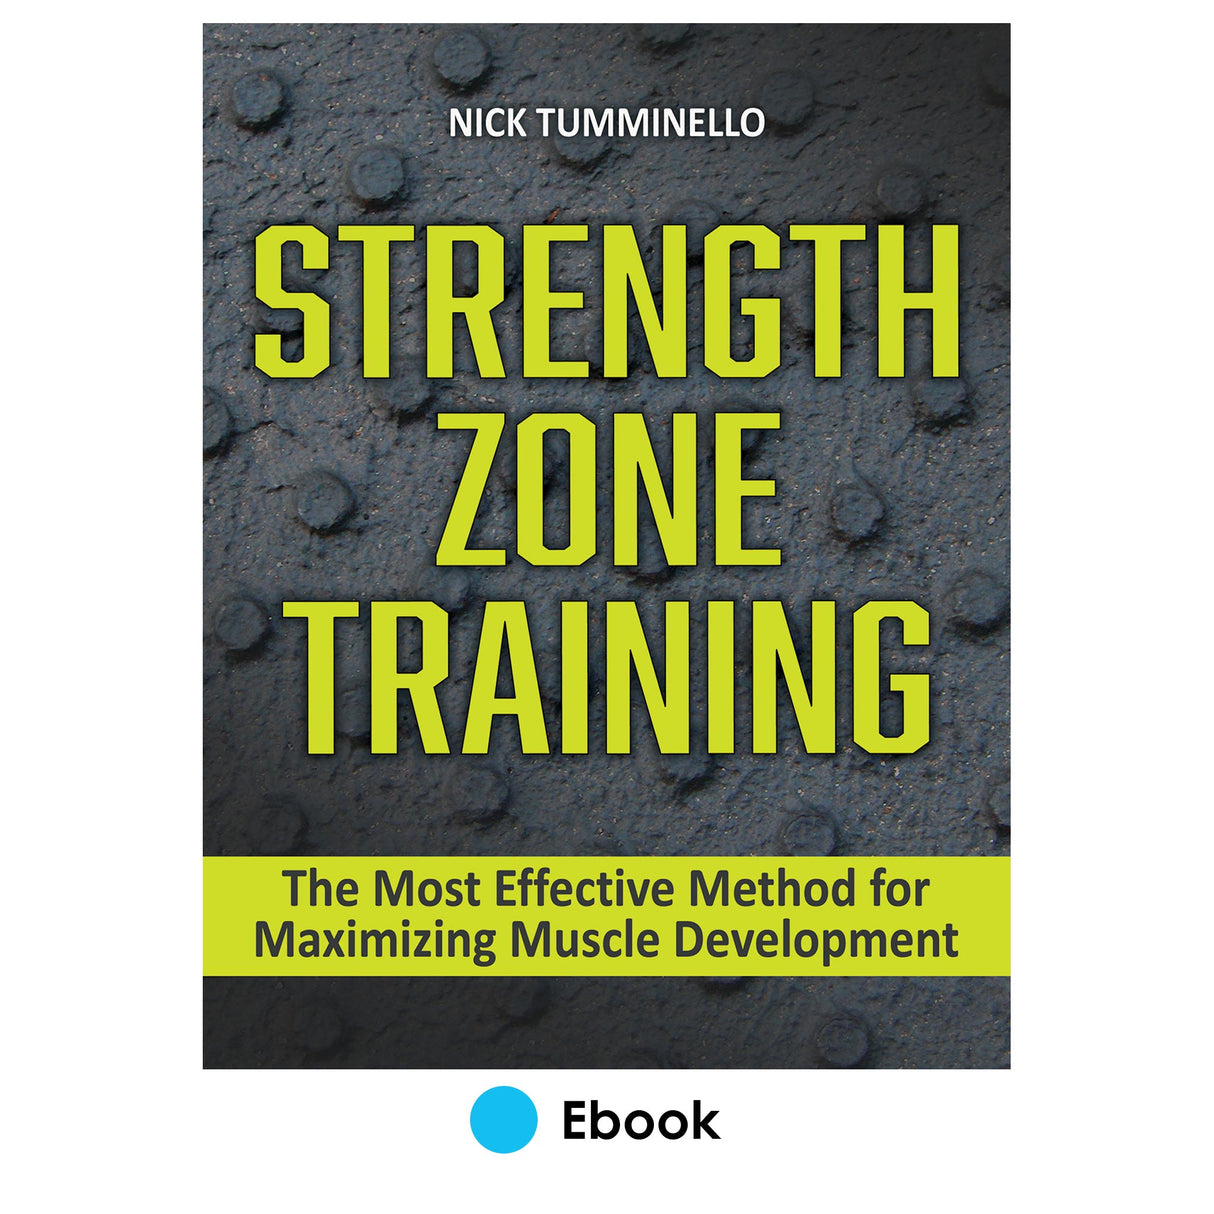 Strength Zone Training epub